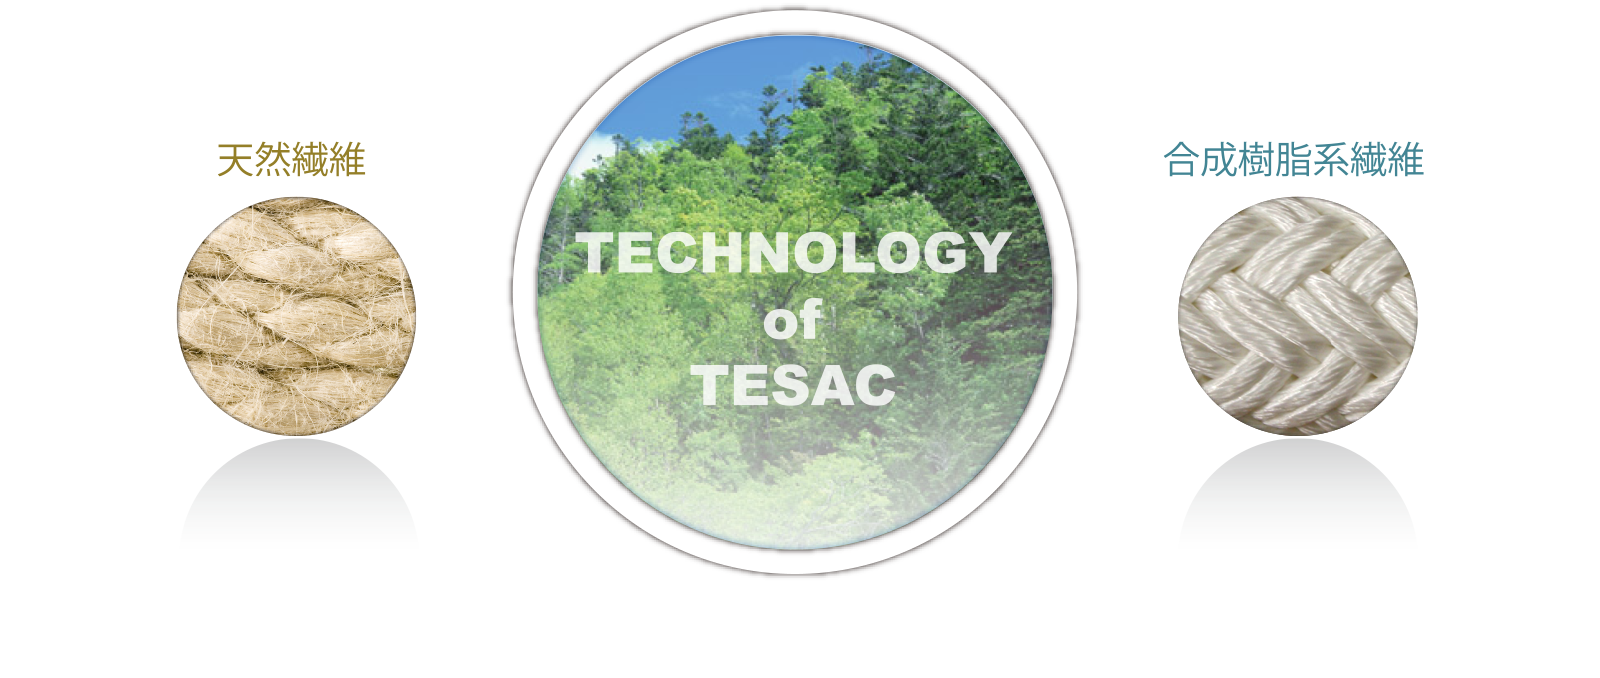 Technology of TESAC